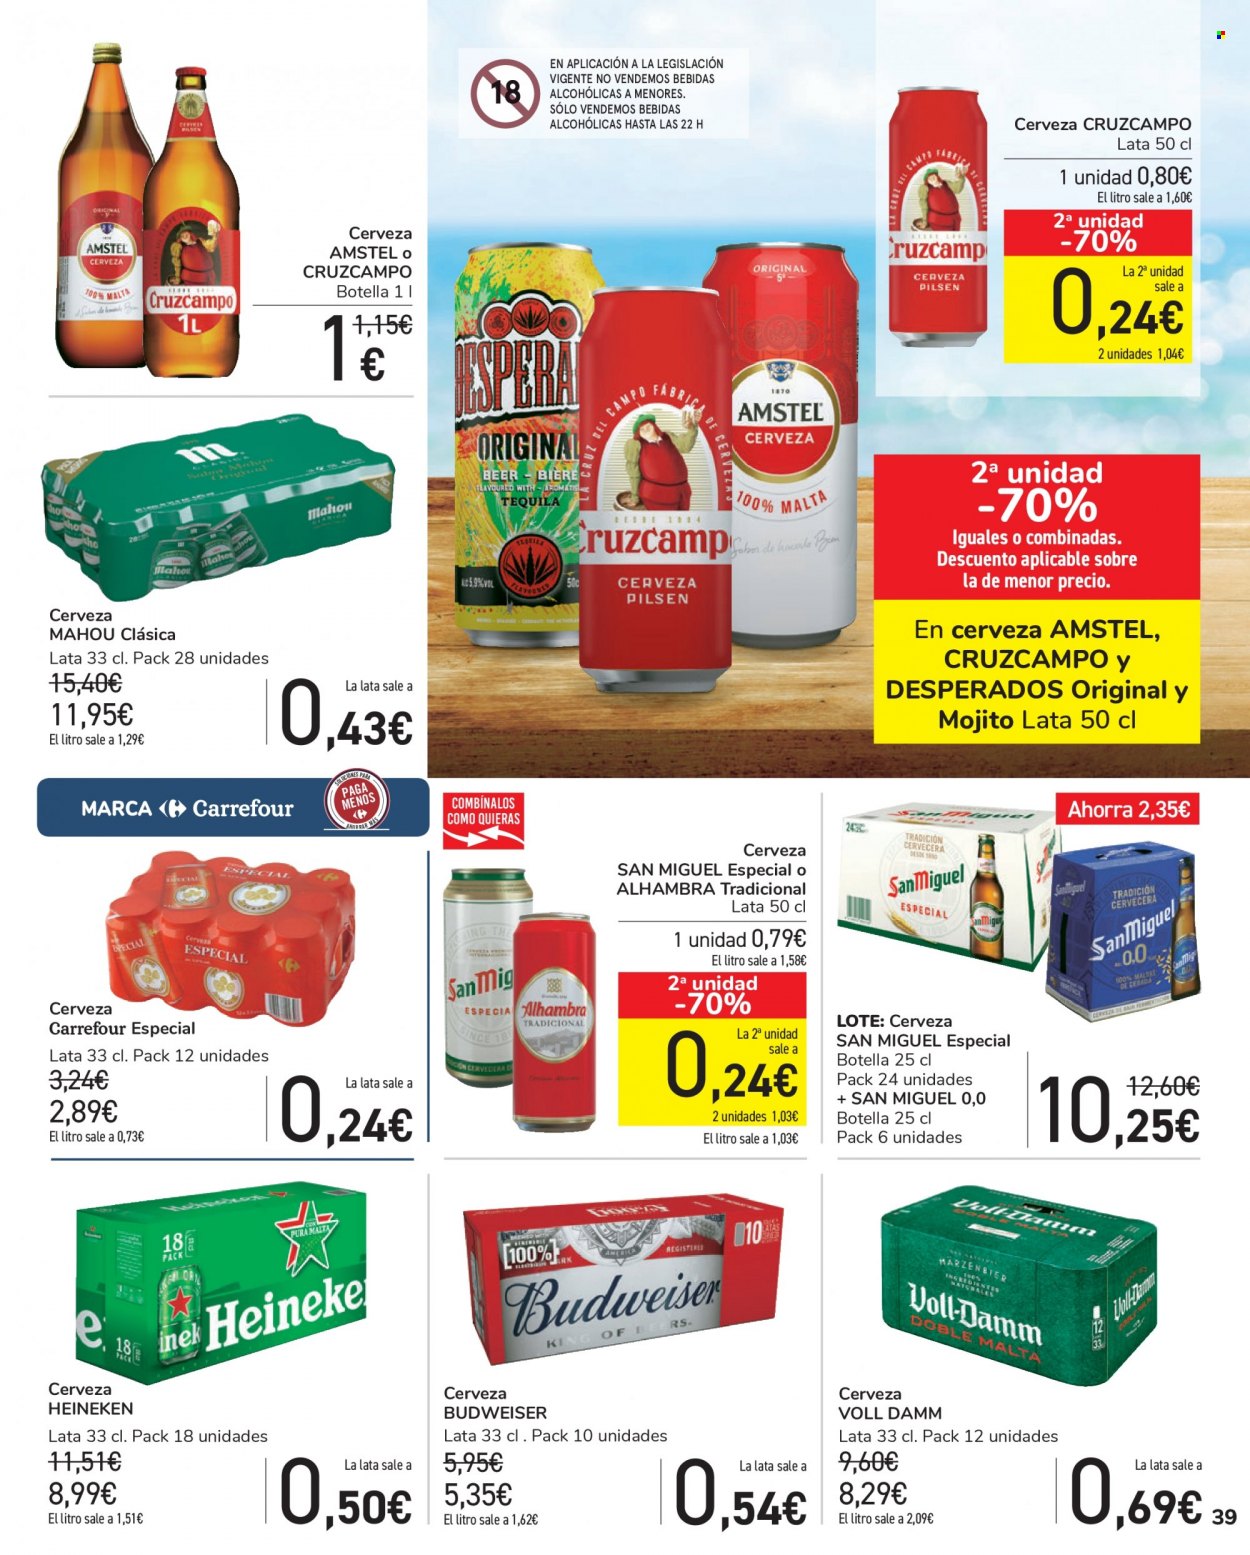 thumbnail - Folleto actual Carrefour - 03/12/21 - 14/12/21 - Ventas - Alhambra, Budweiser, Heineken, Mahou, Voll-Damm, San Miguel, Cruzcampo, Pilsen, bebida, tequila, bebida alcohólica. Página 39.